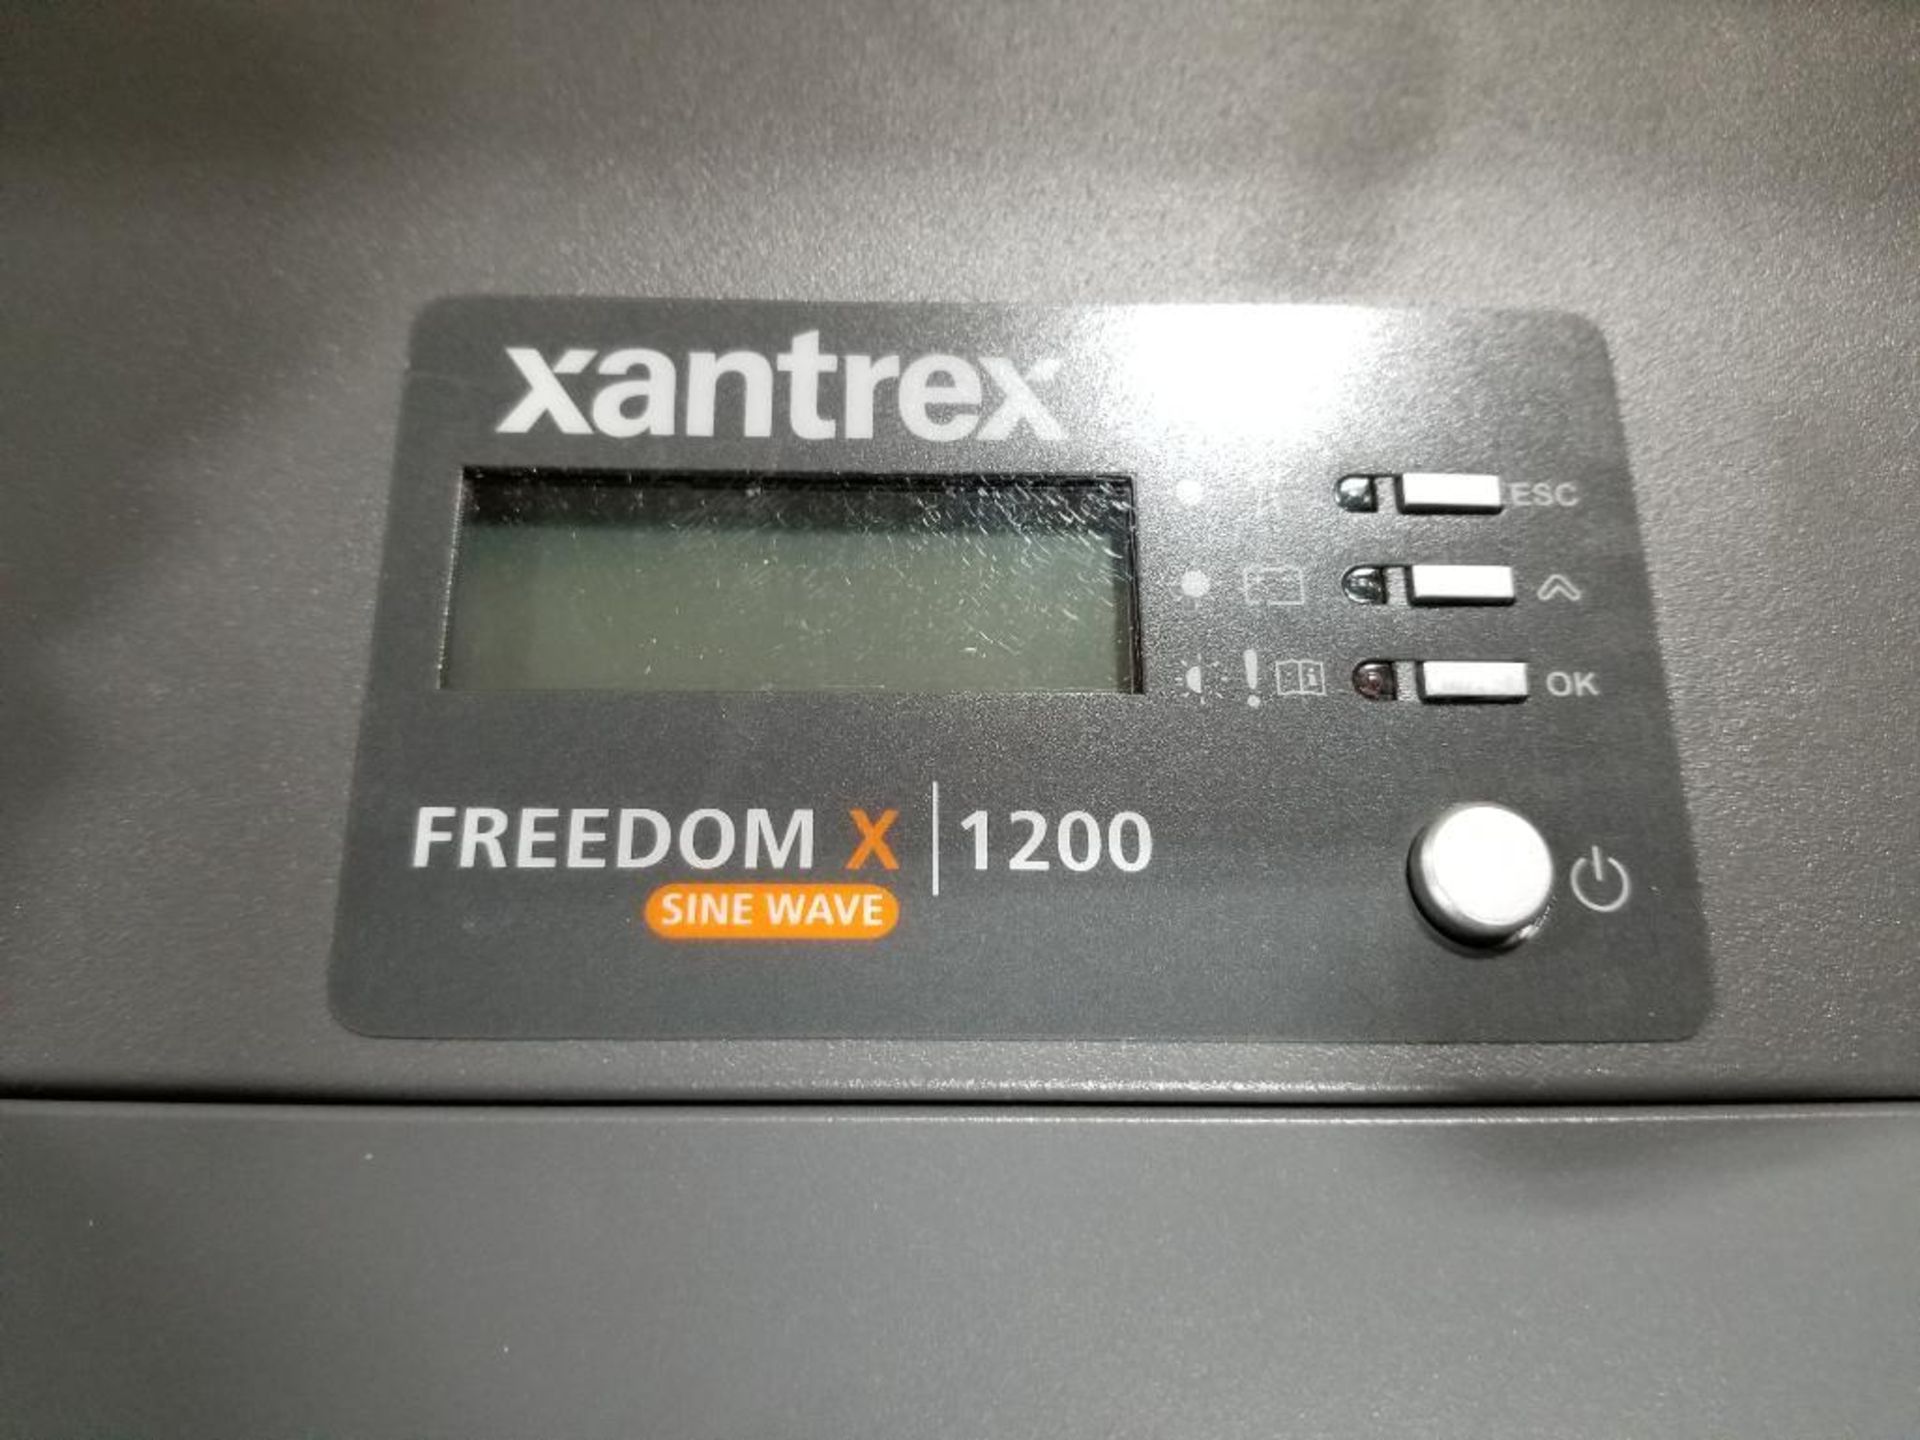 Xantrex true sine wave inverter. Model Freedom X 1200. Factory refurbished unit. - Image 2 of 6